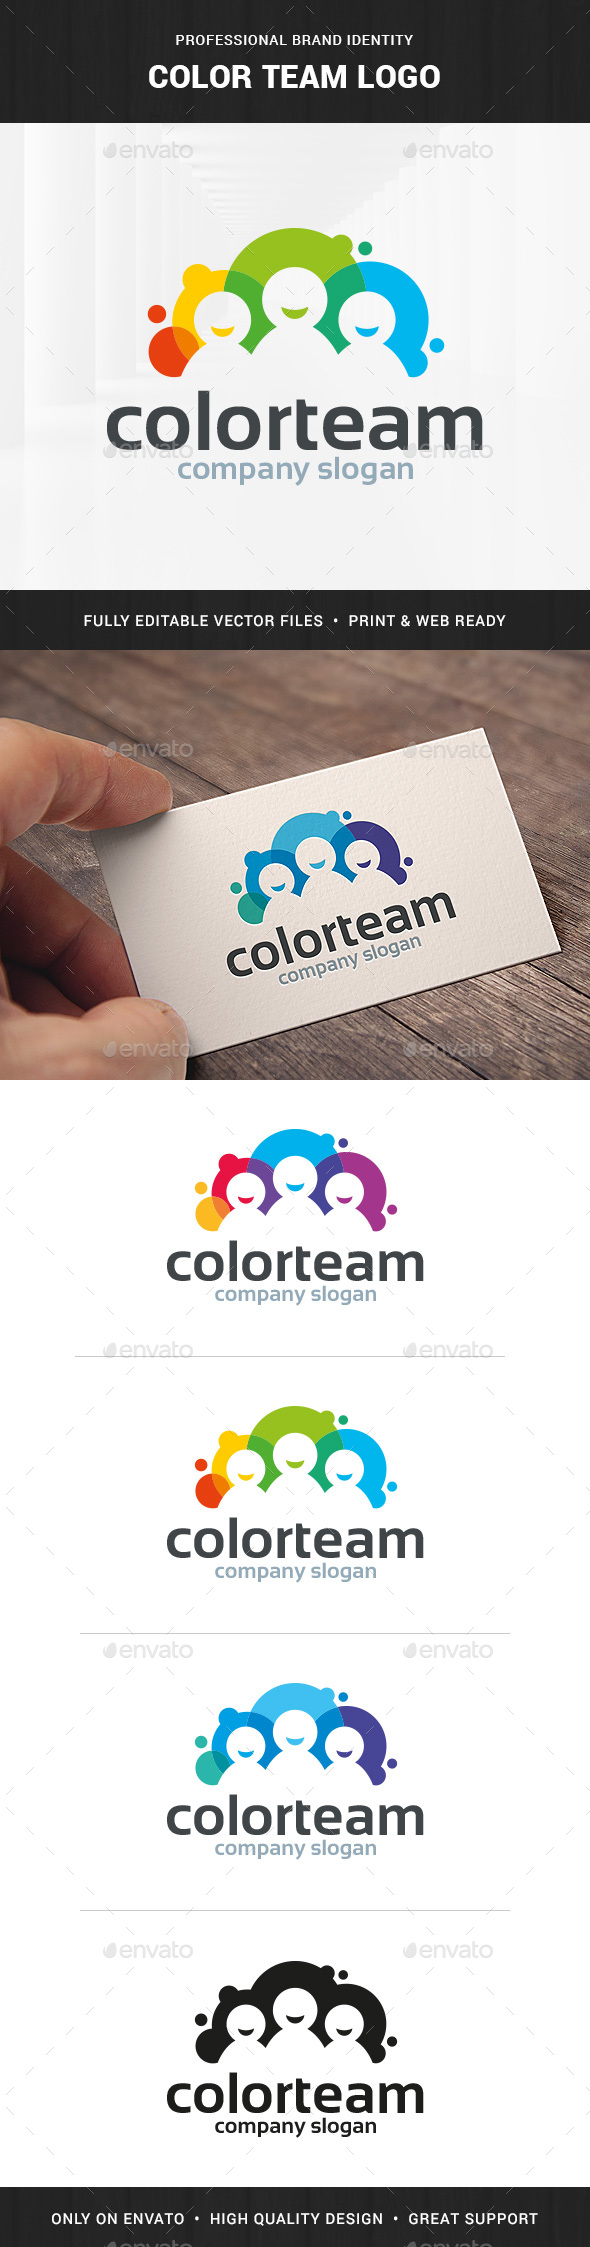 Color Team Logo Template in Human Logos